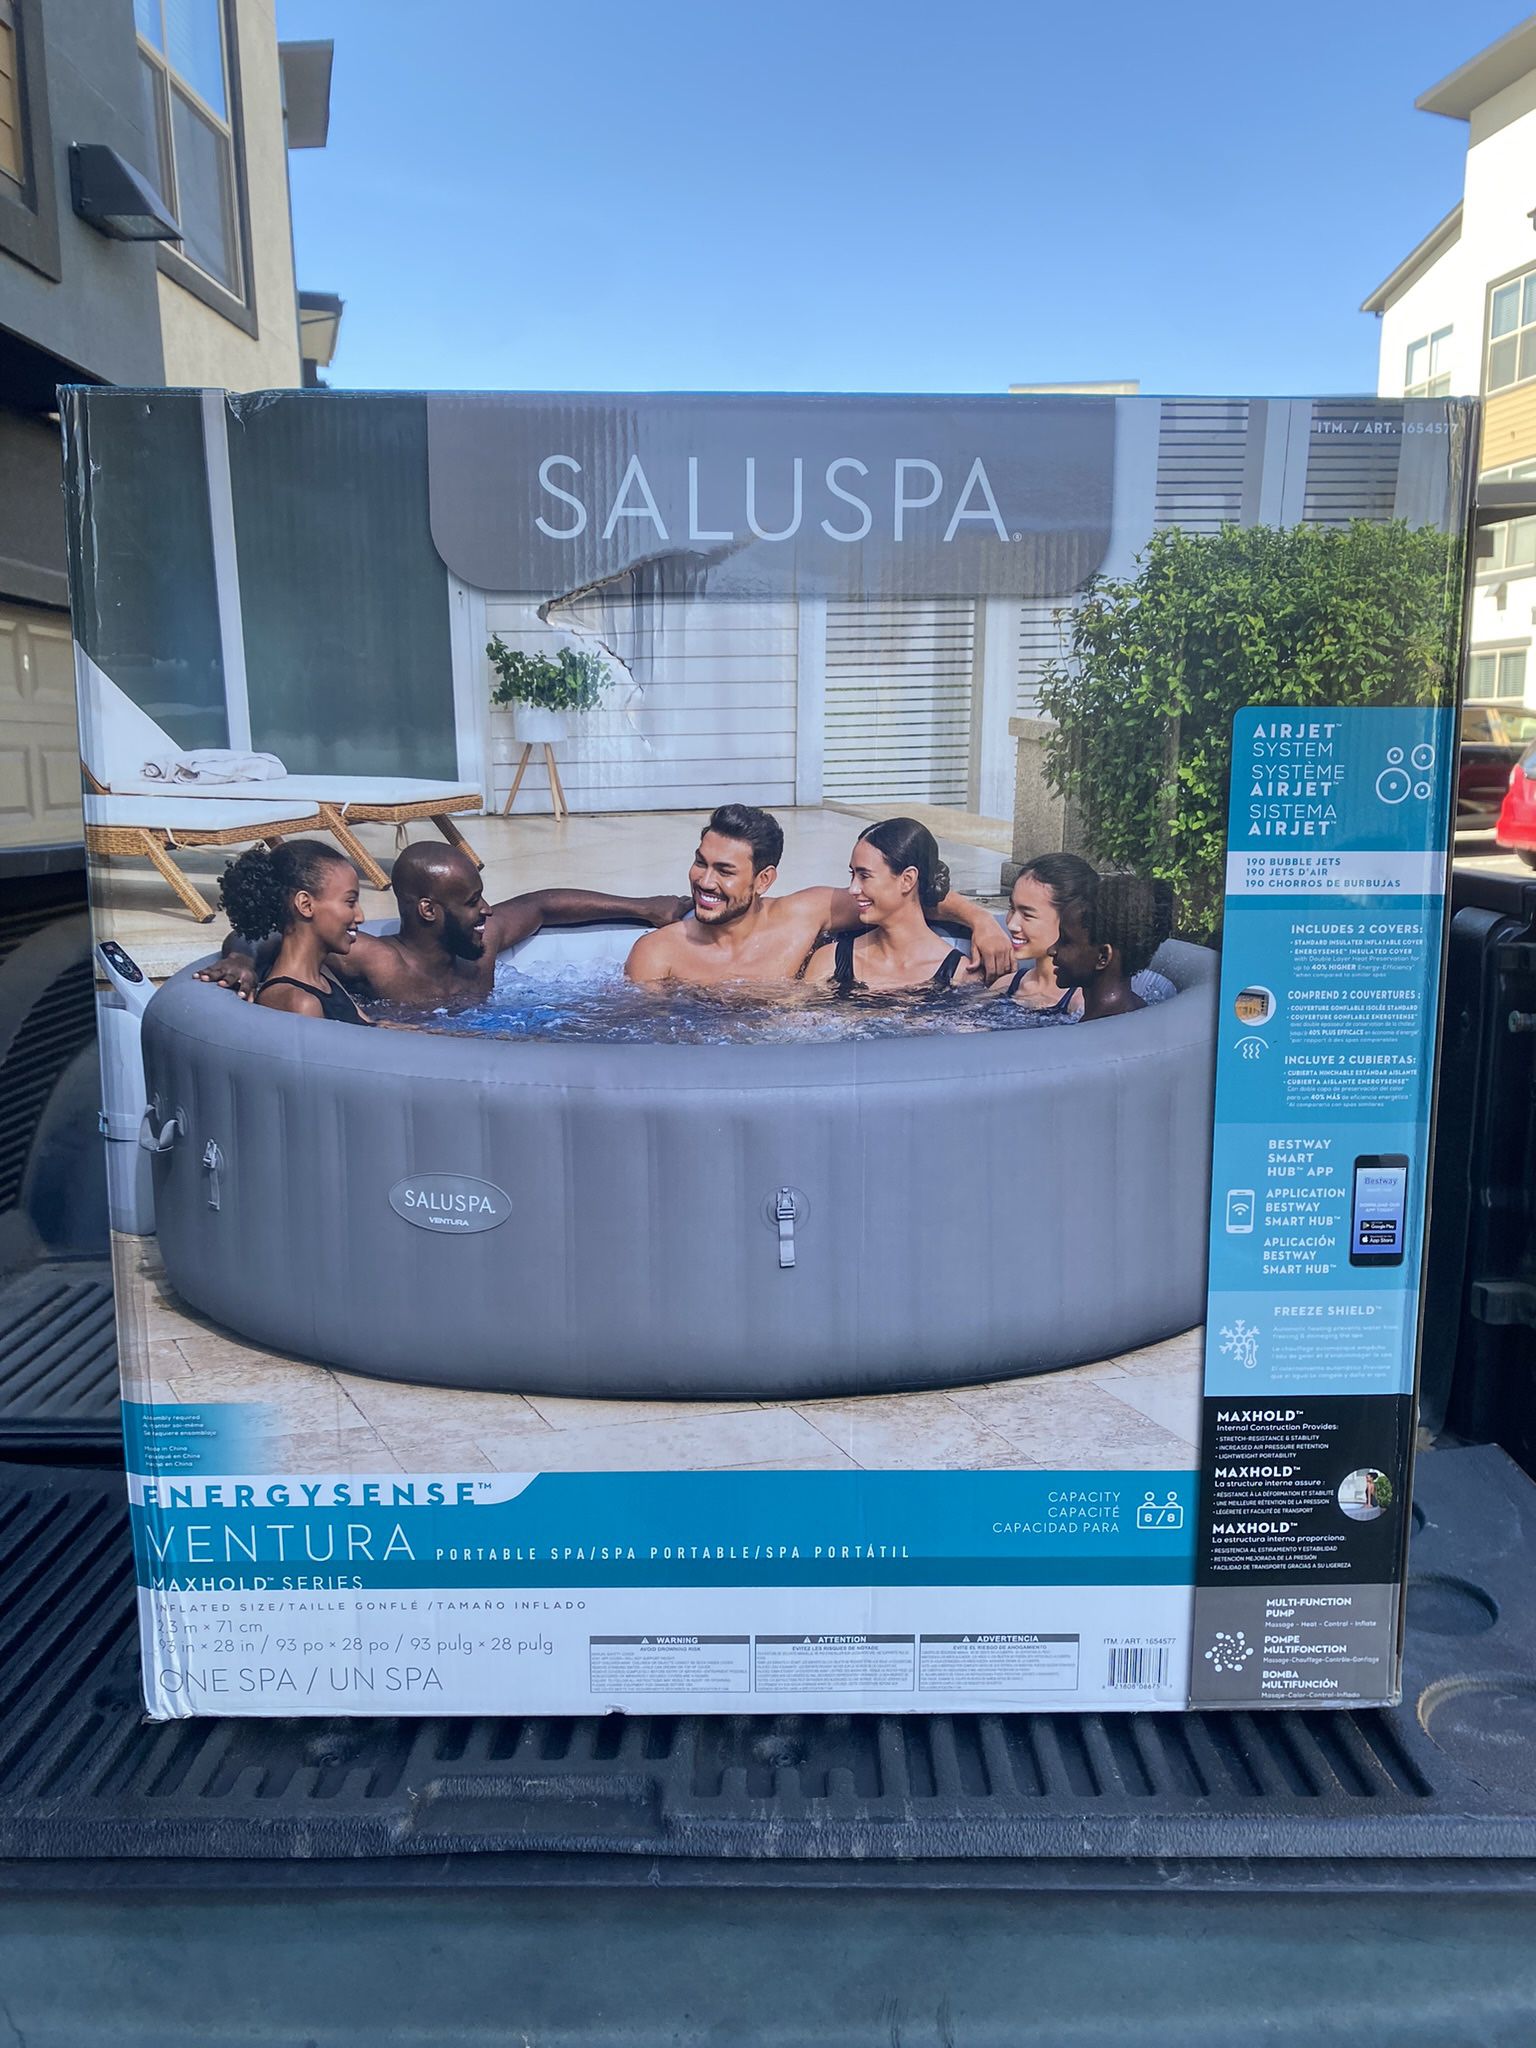 Inflatable Hot Tub Spa - SaluSpa Ventura - 6/8 Person